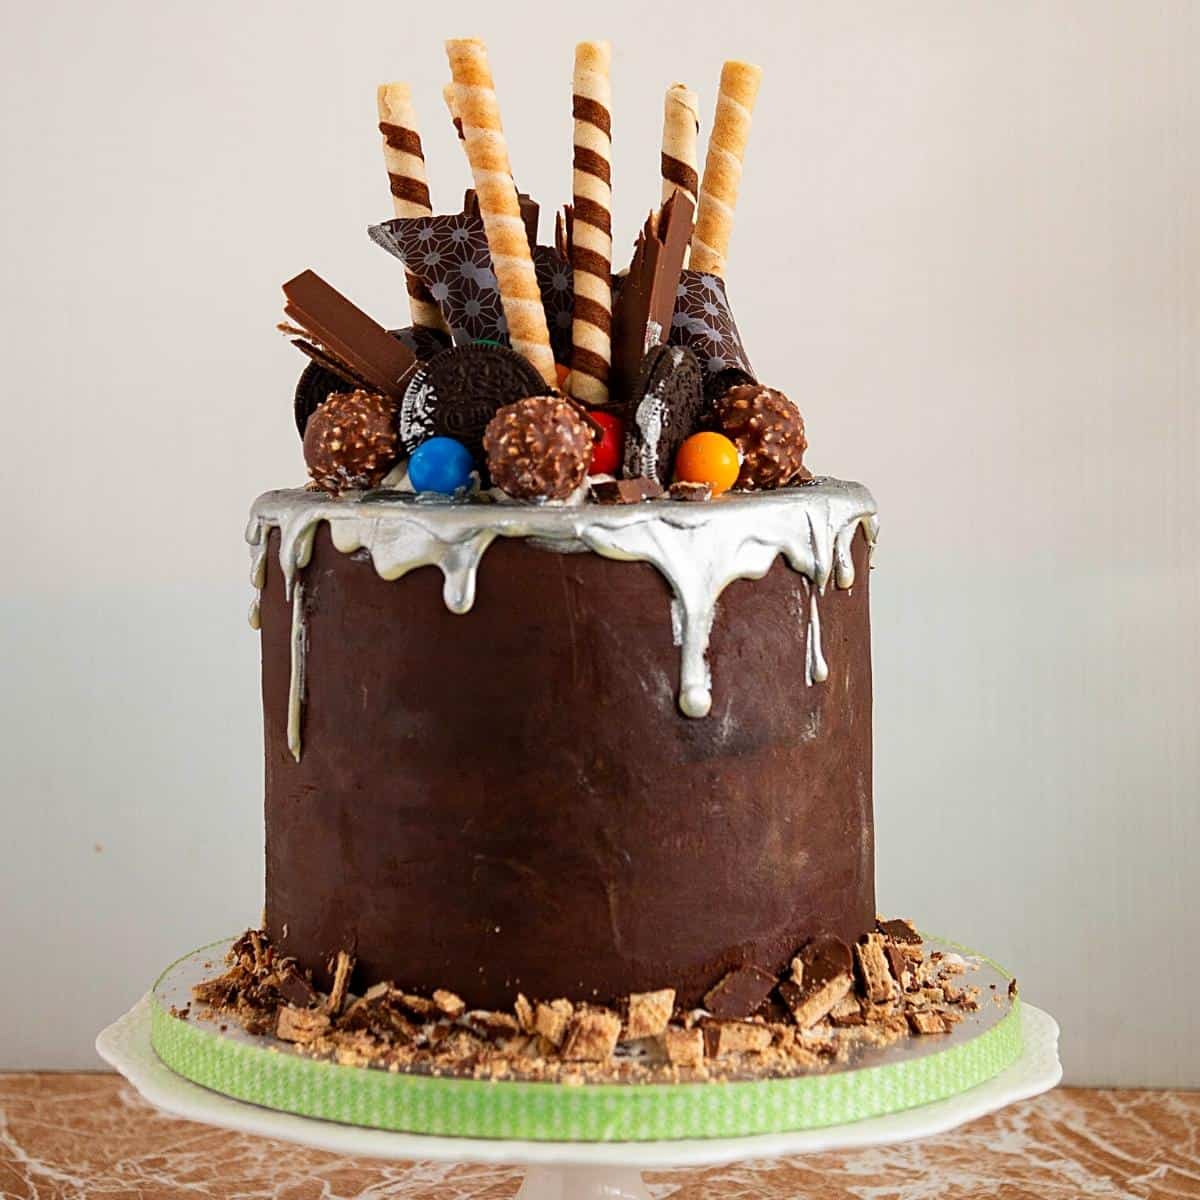 A ganache cake with chocolate ganache drip.